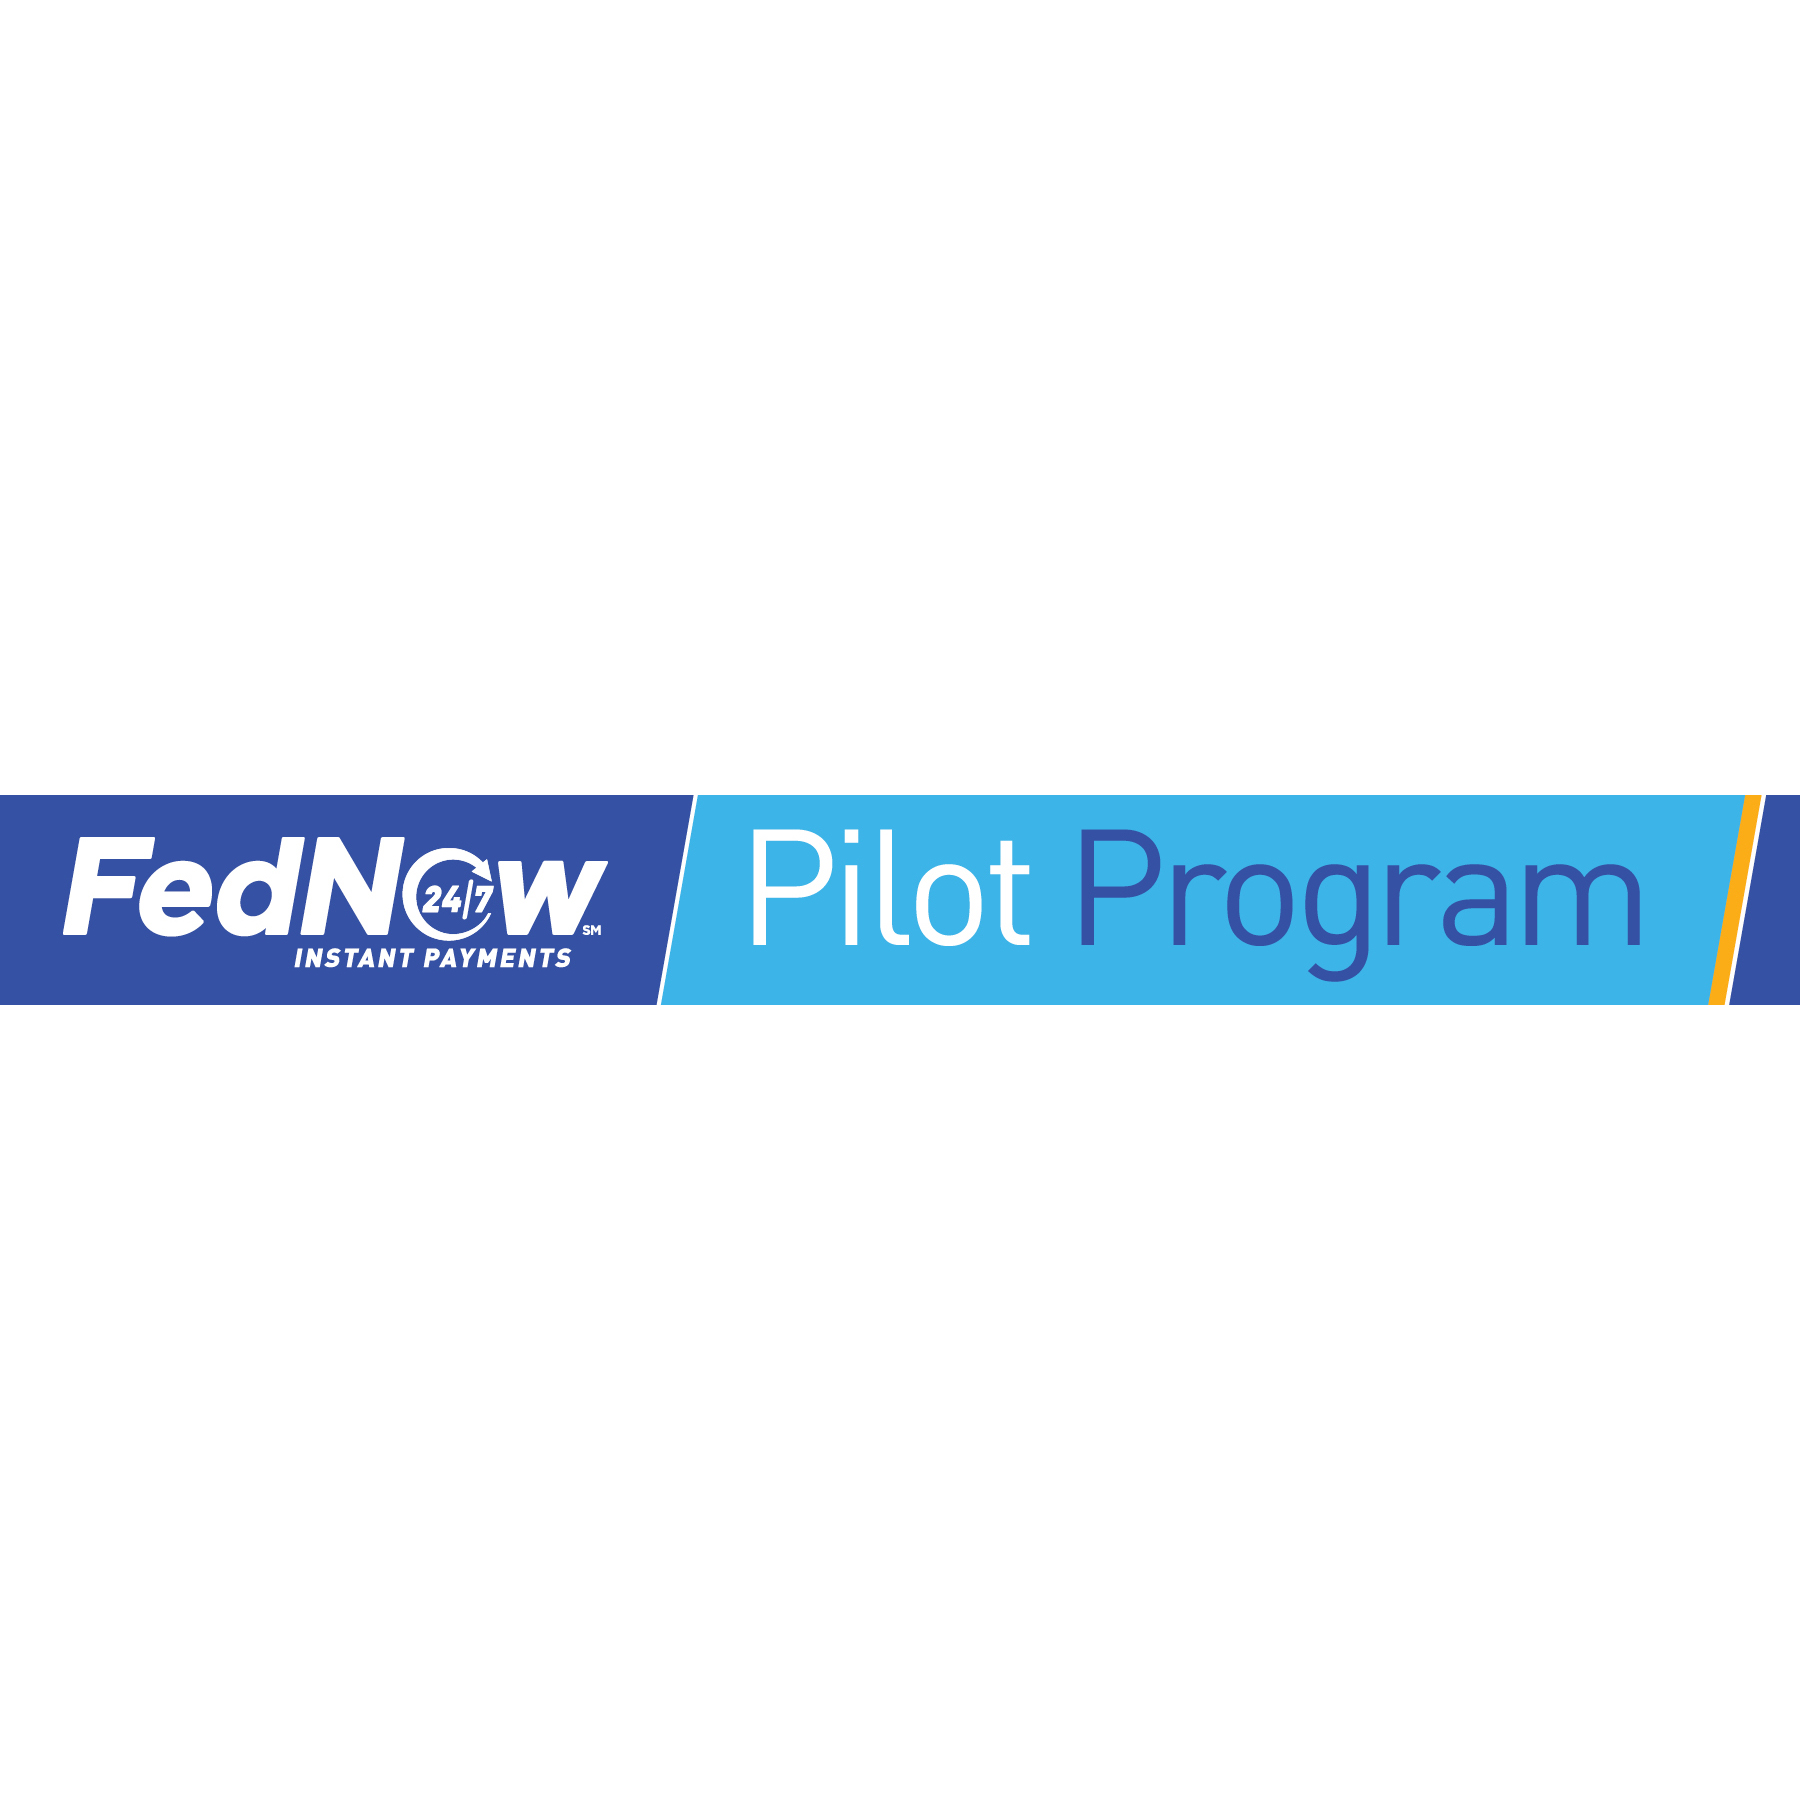 FedNow℠ Service Pilot Program Achieves Message Delivery Milestone